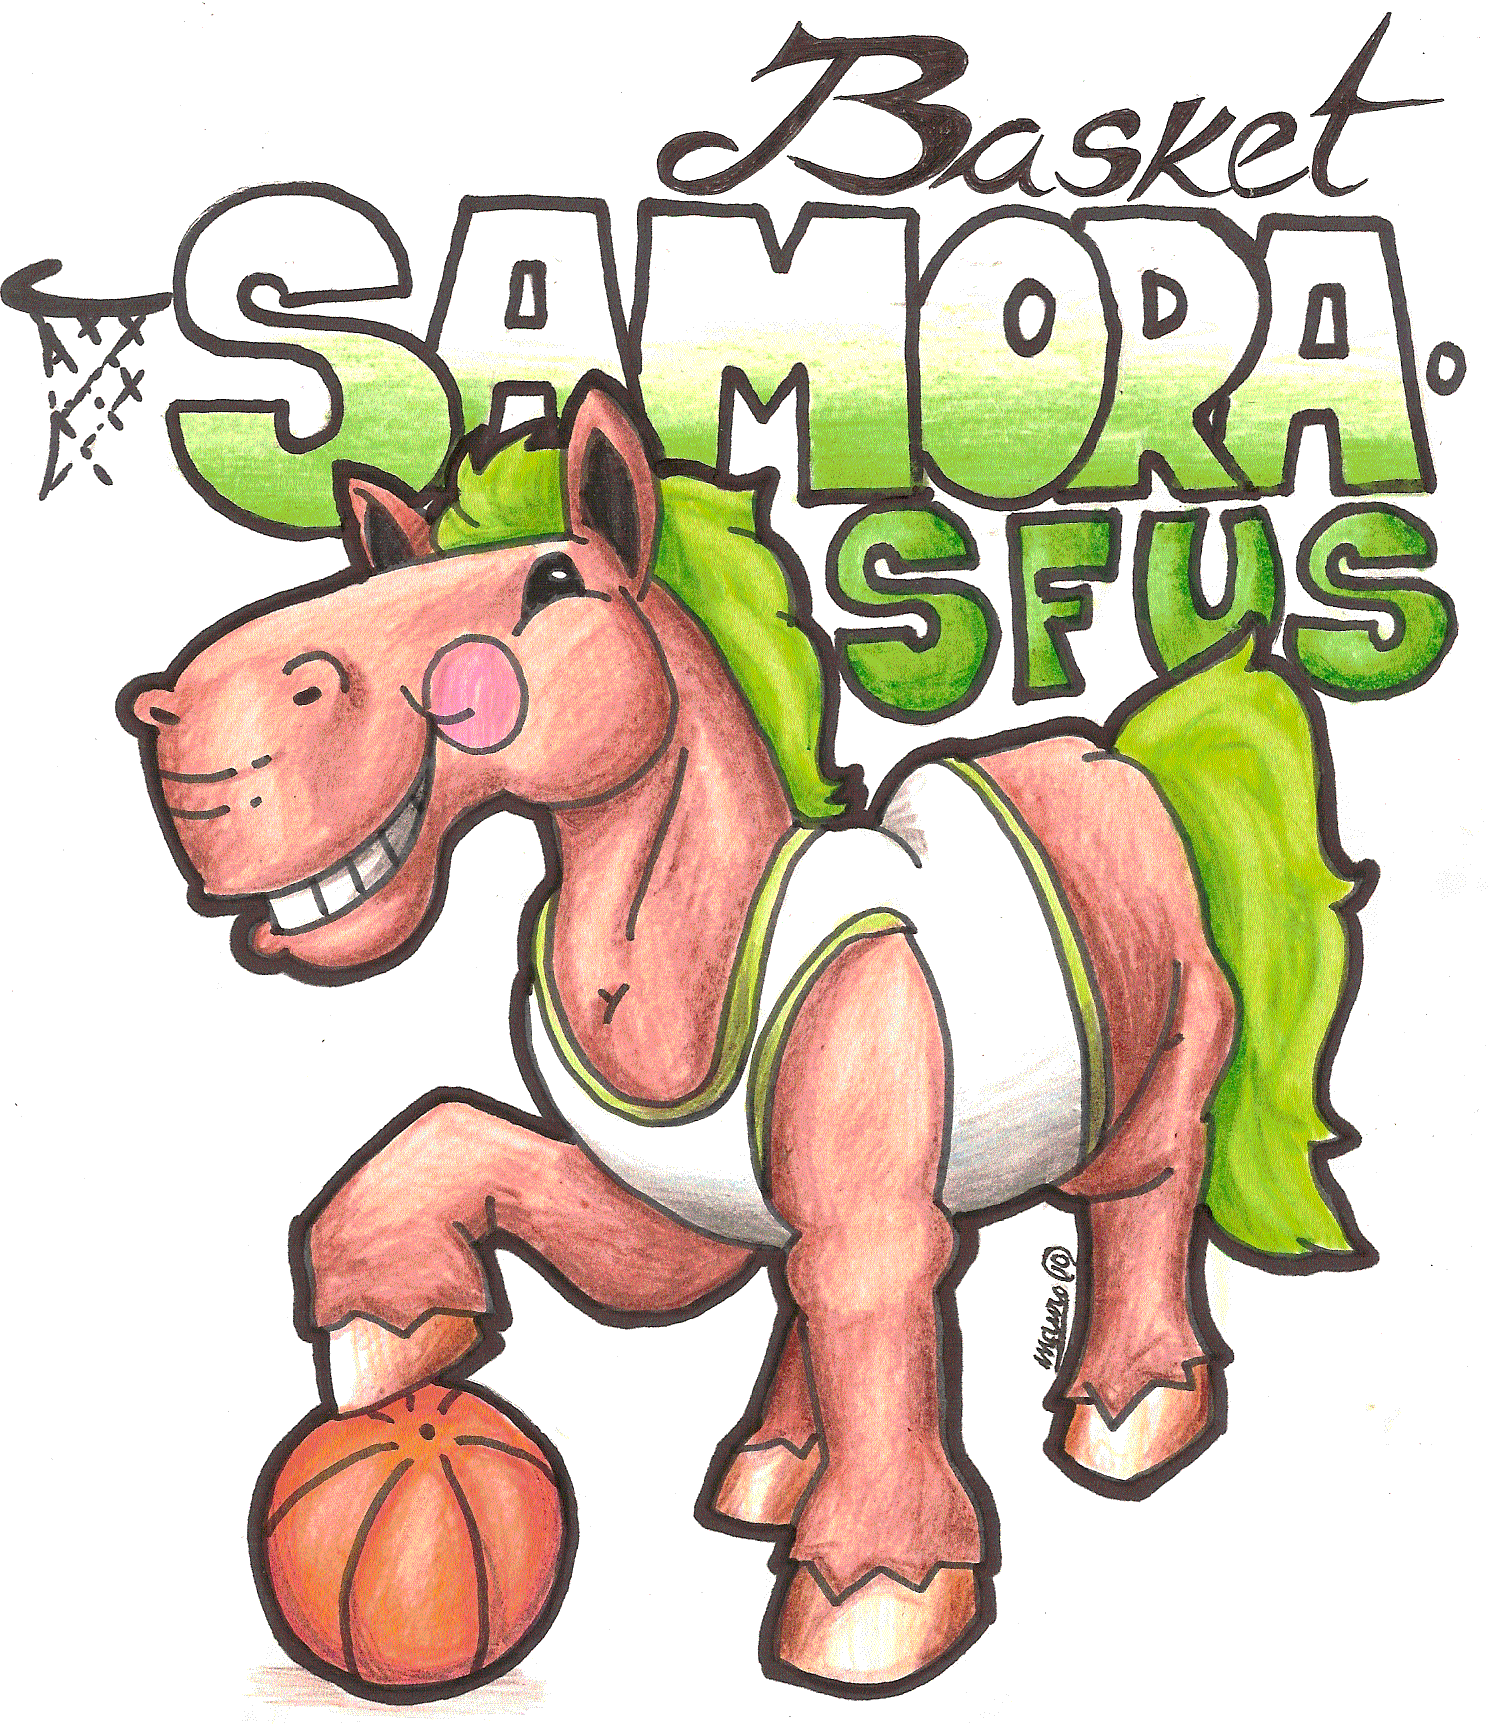 Logo SFU Samorense 